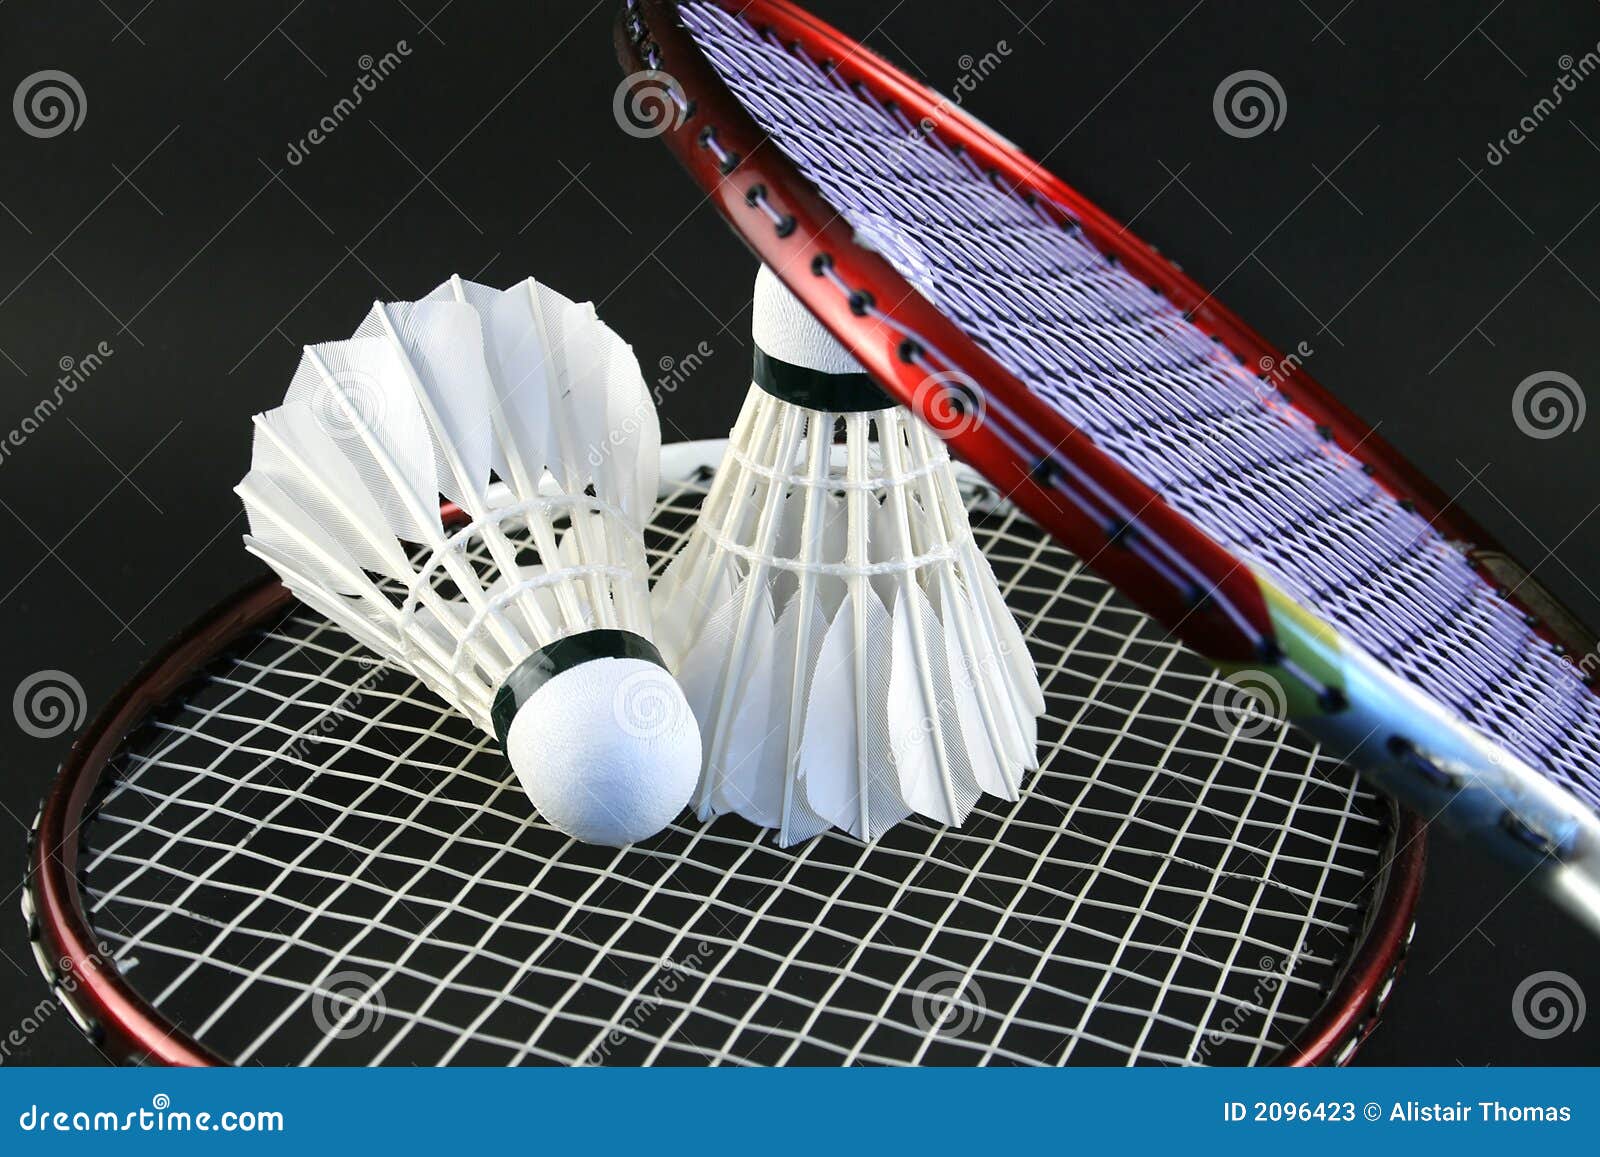 Badminton Equipment Stock Photo Download Image Now Badminton Sport, Close-up, Color Image IStock lupon.gov.ph